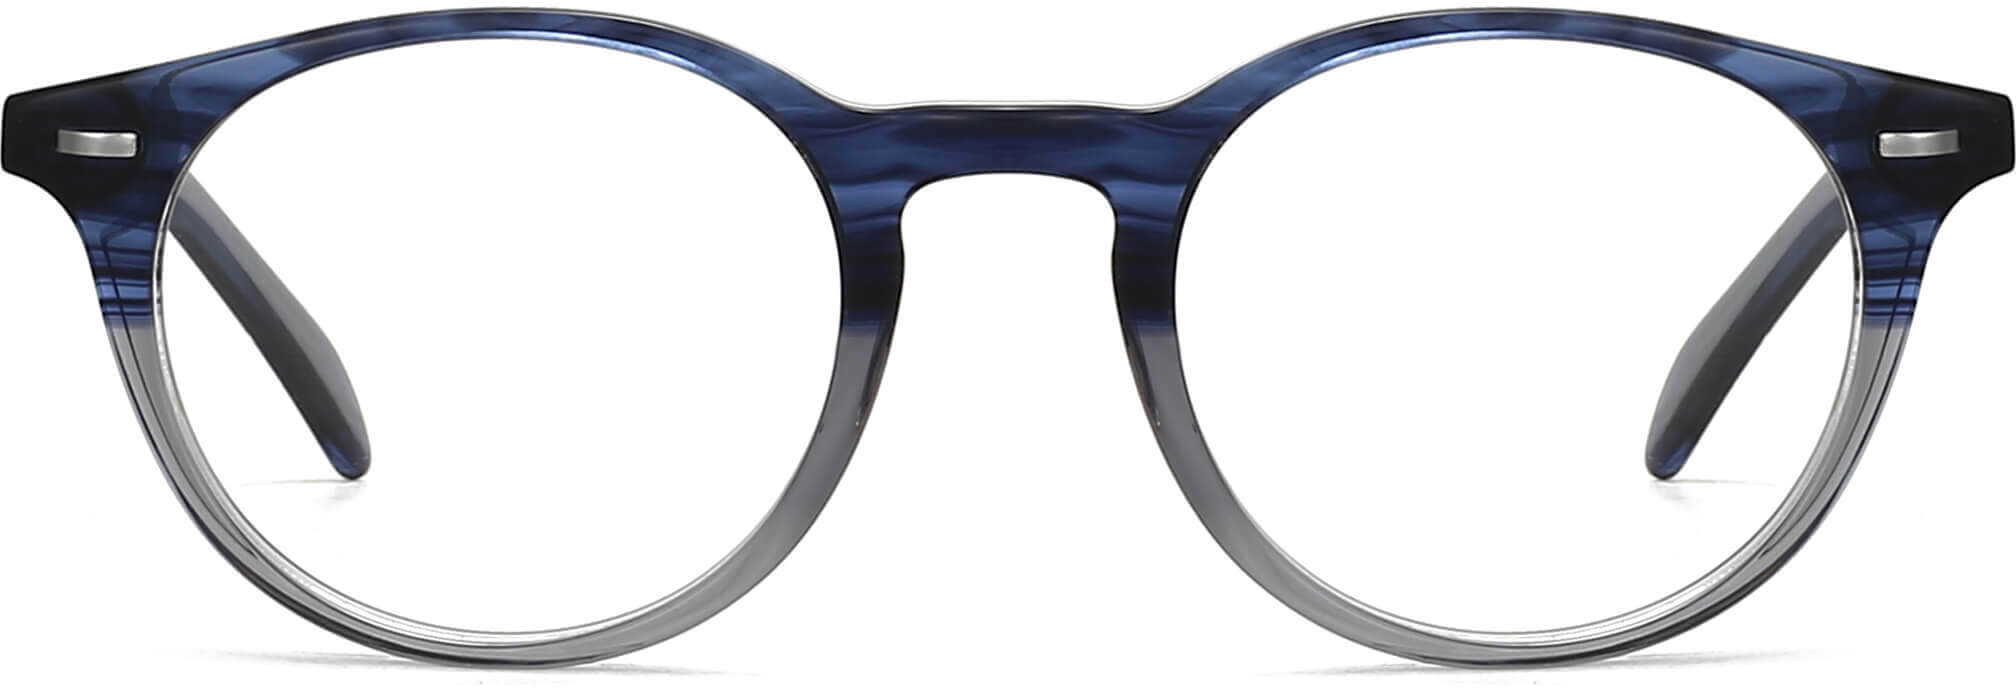 Emilia Round Gray Eyeglasses from ANRRI